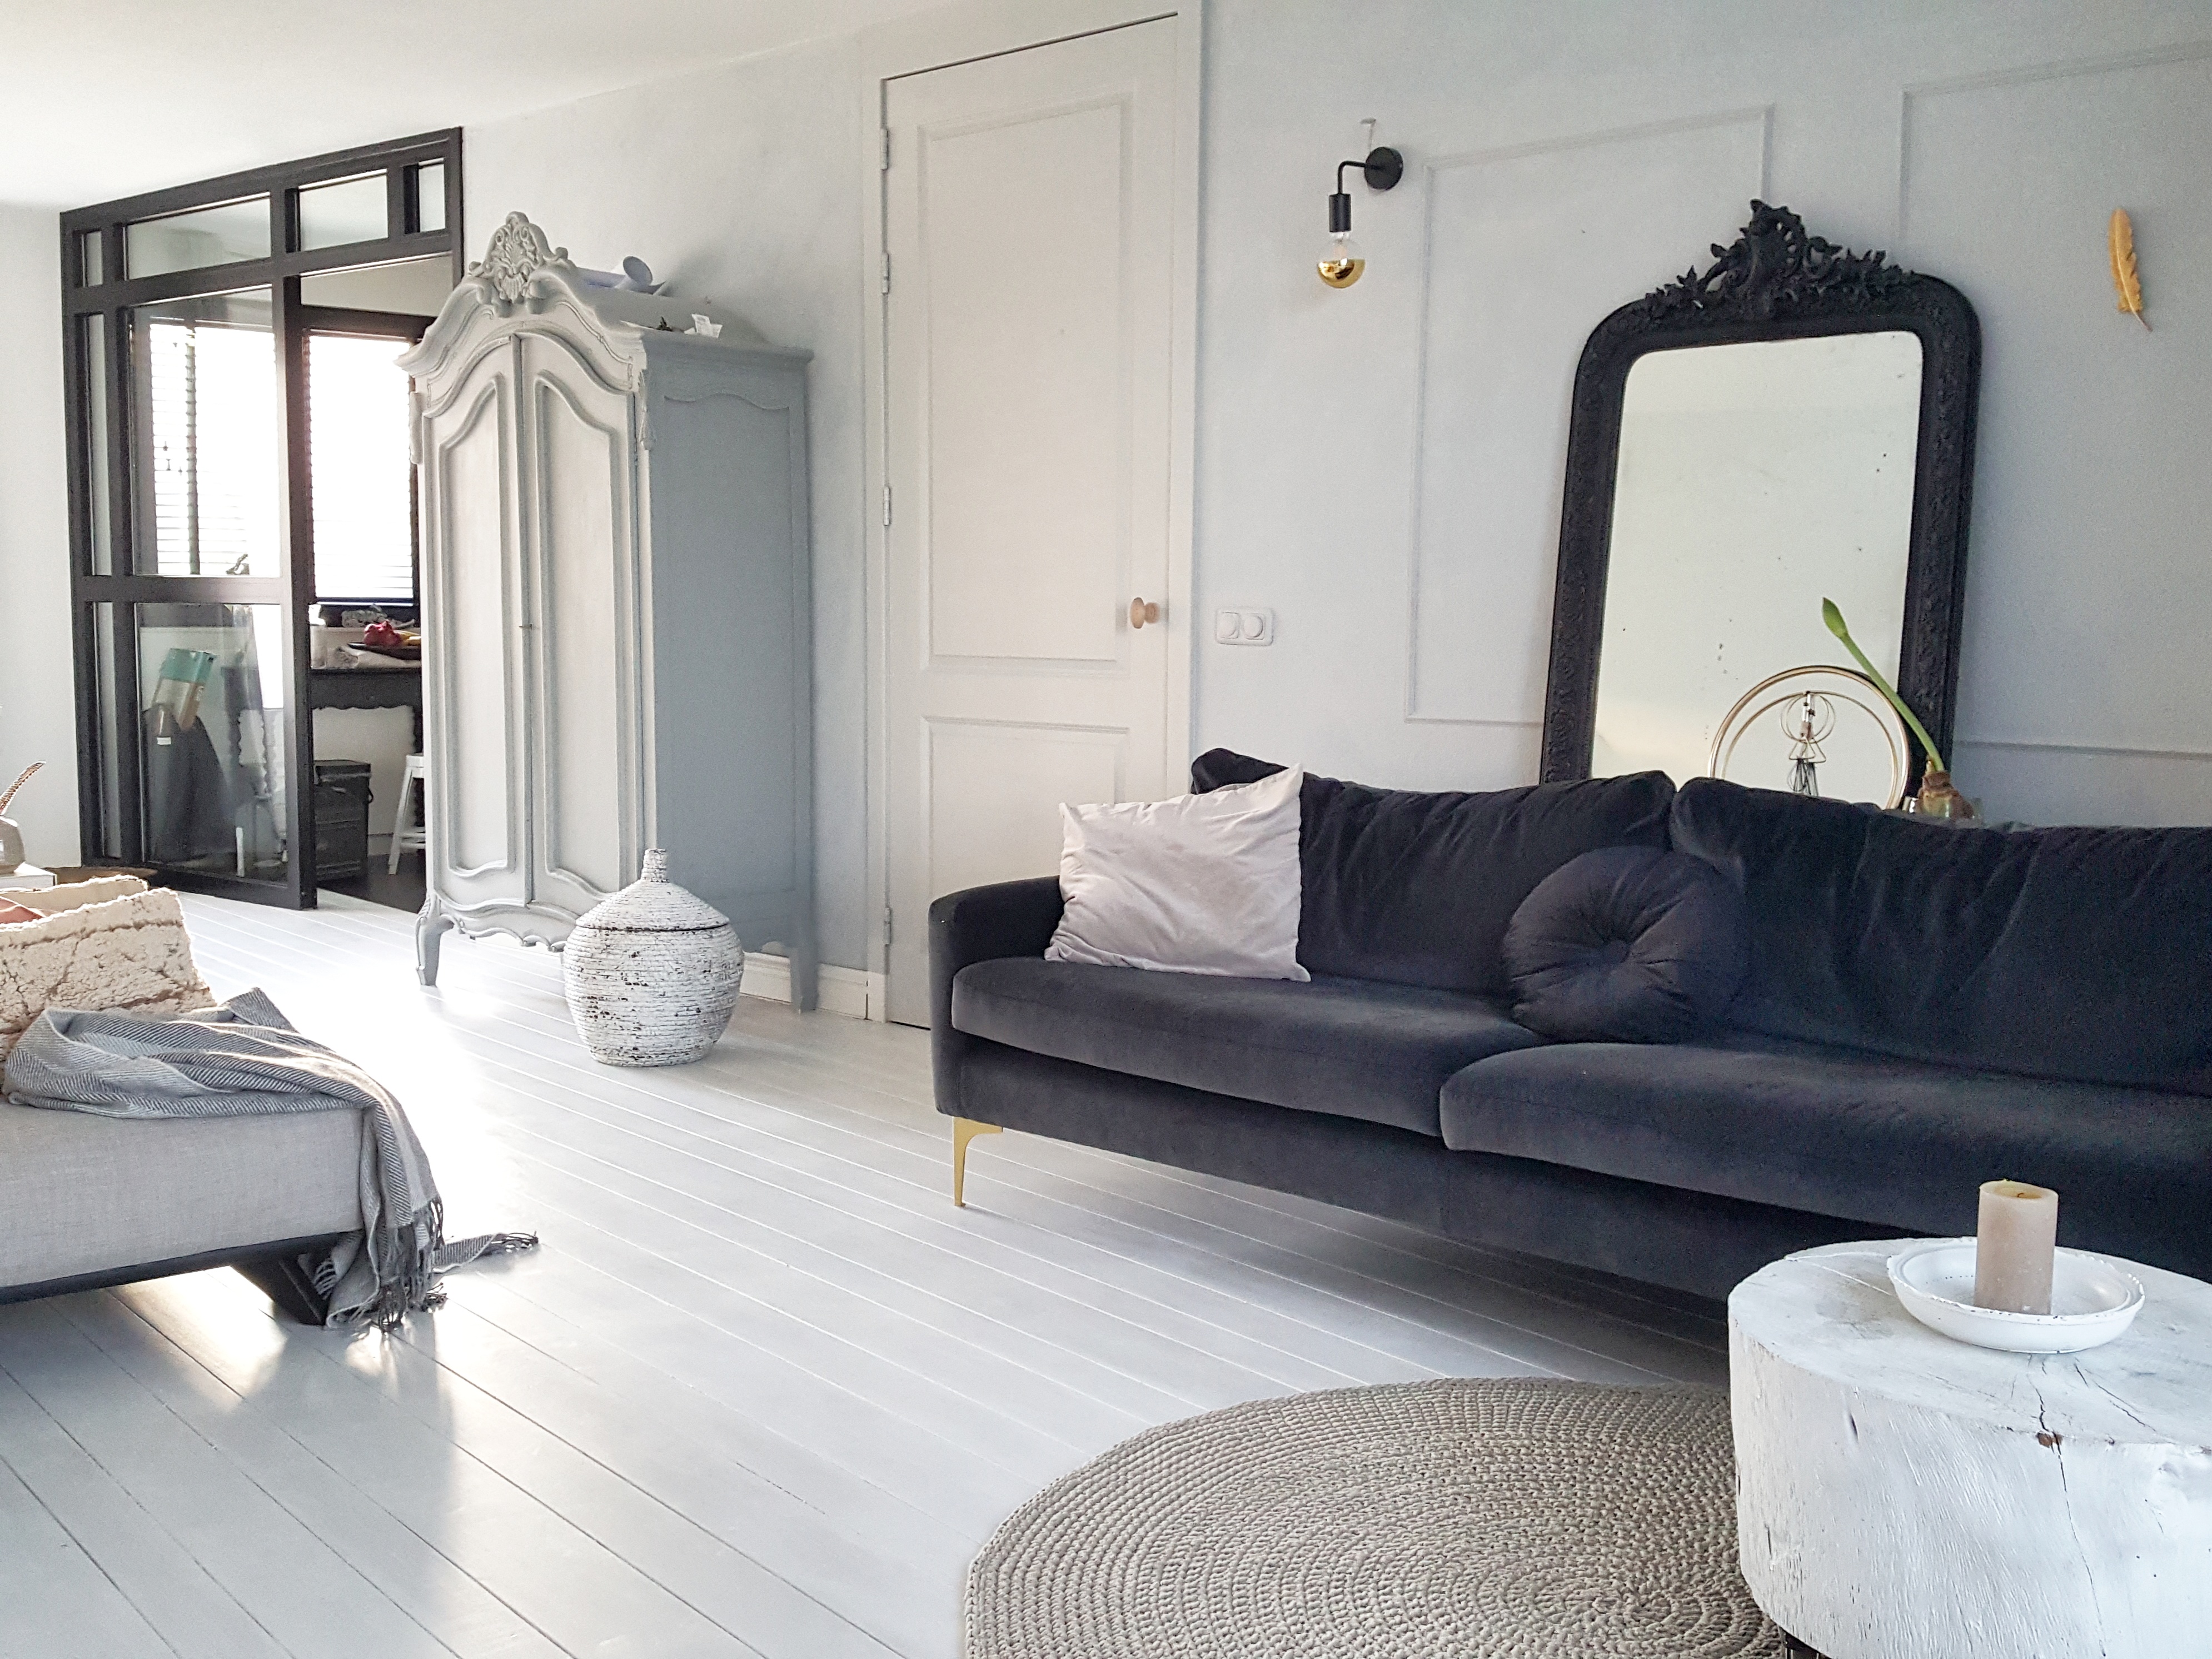 Verwonderend scandinavischwonen – House-Proud, Styling & Interieur KQ-82